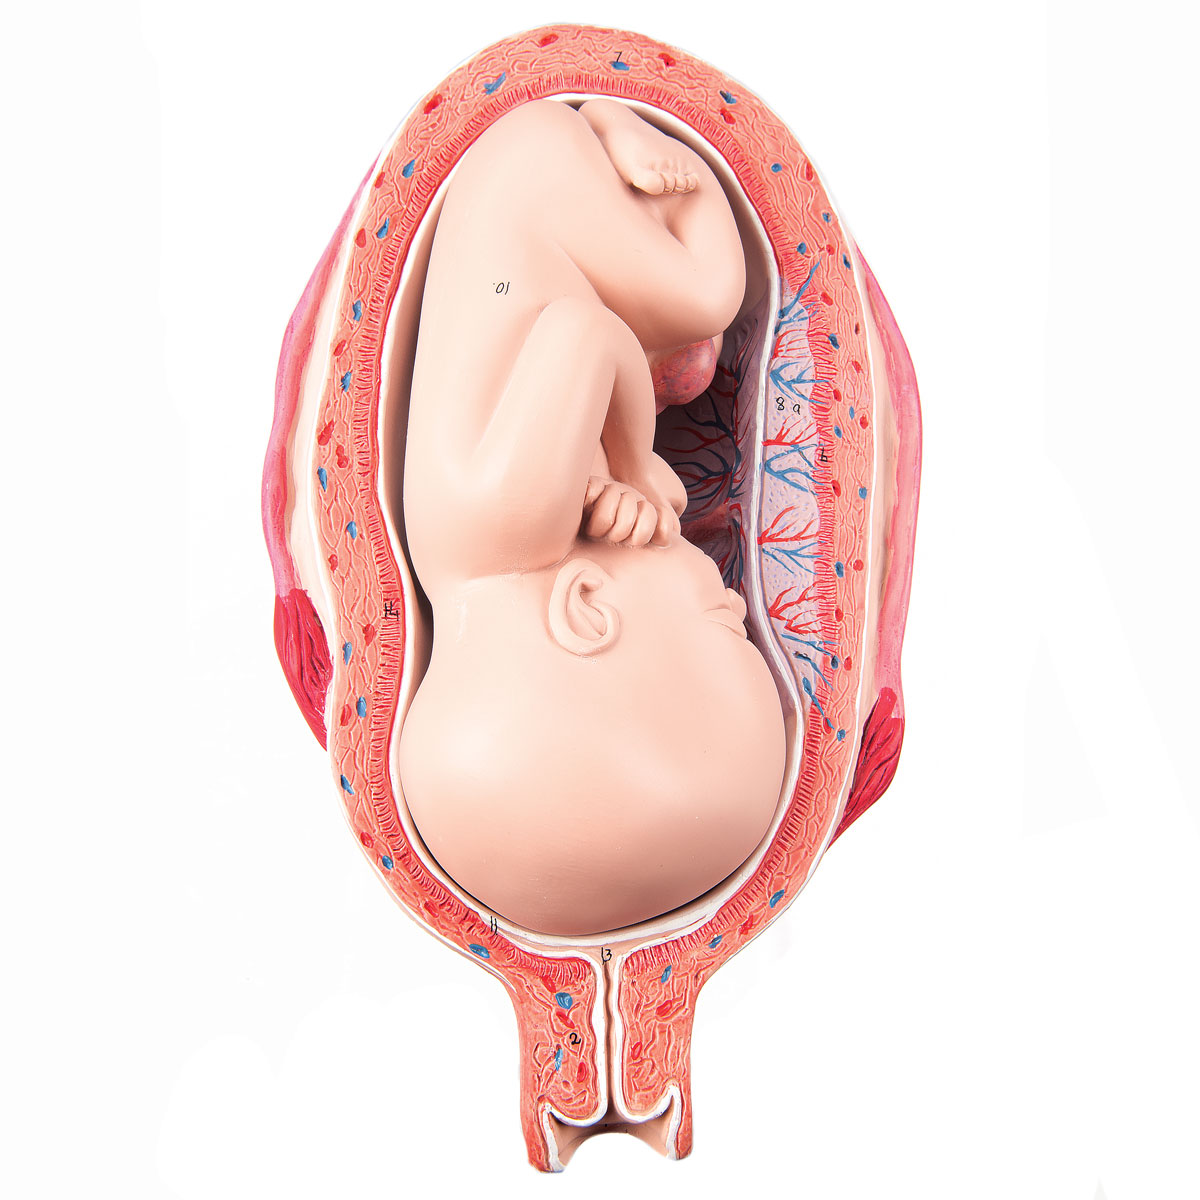 оргазм и гипертонус матки при беременности фото 74